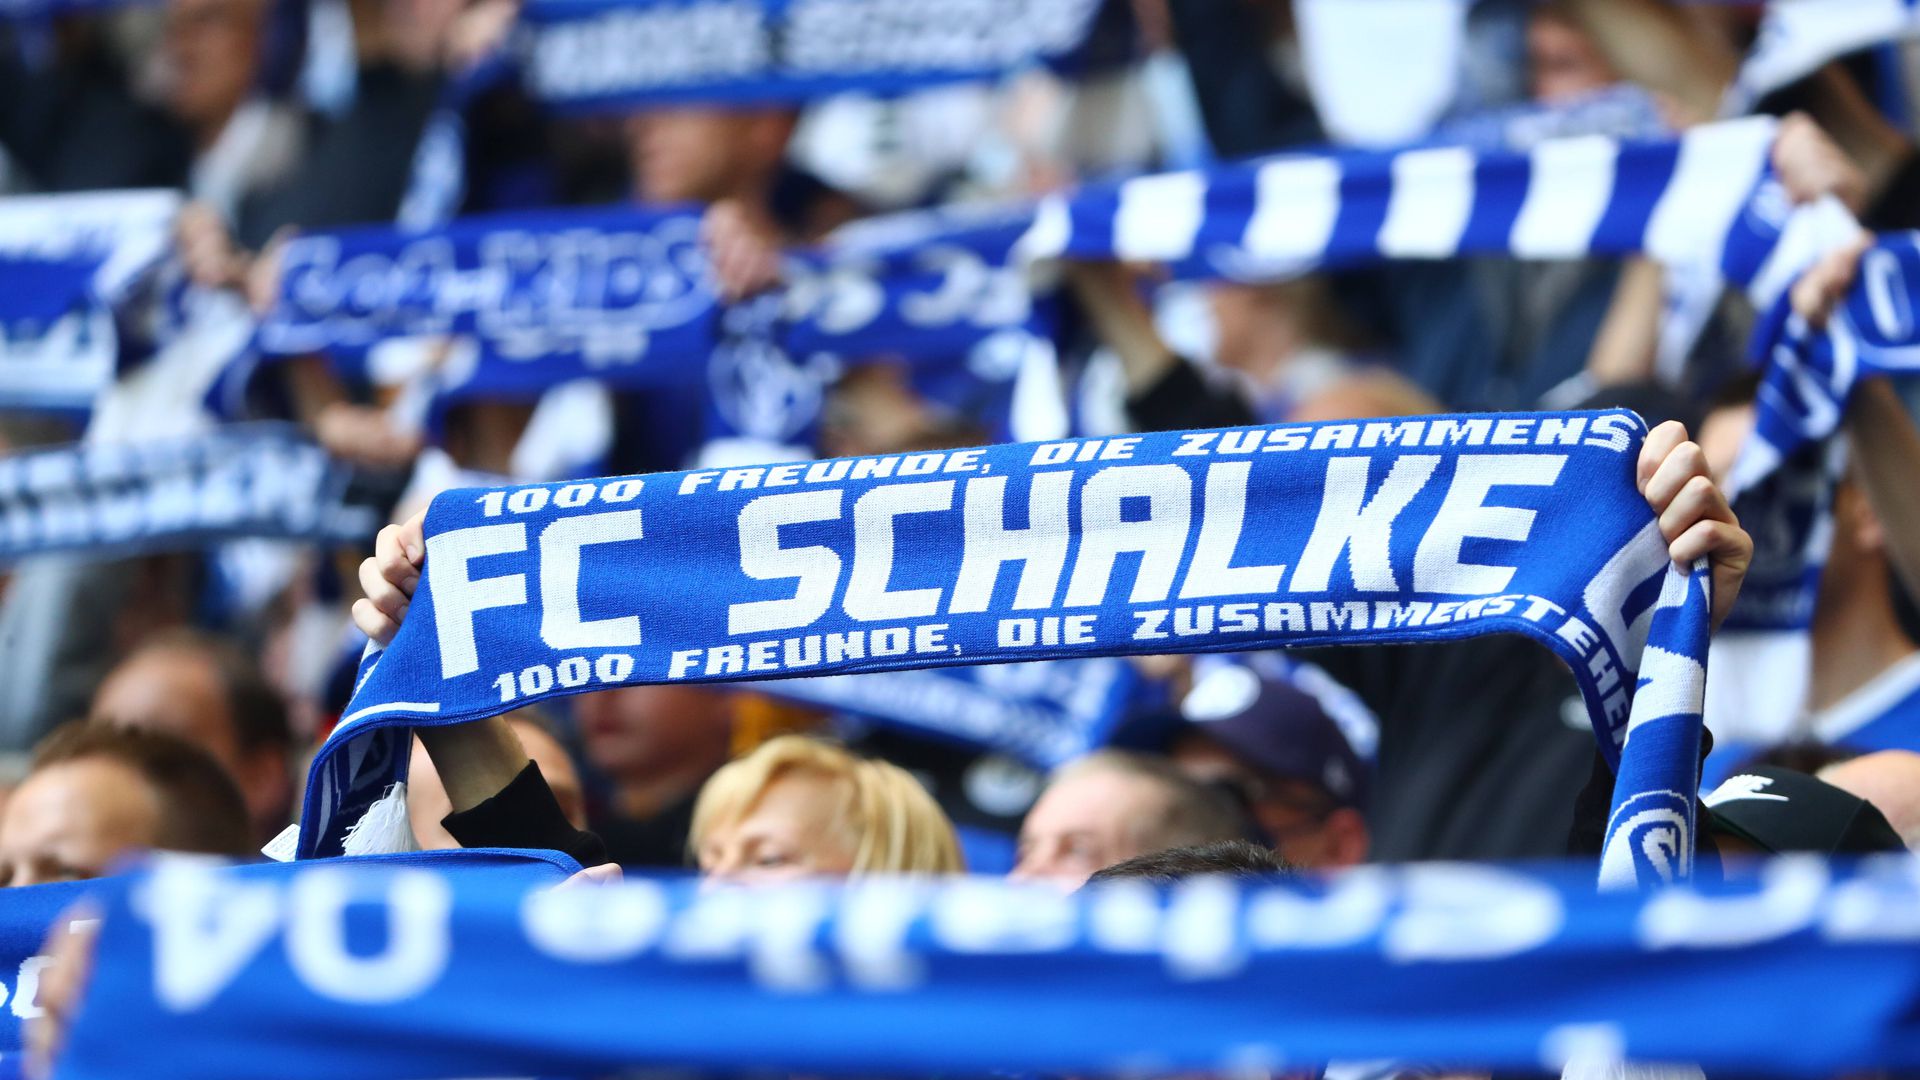 Schalke-Fans mit Schals FC Schalke 04 vs SV Werder Bremen, Fussball, 2. Bundesliga, 23.04.2022 DFL REGULATIONS PROHIBIT ANY USE OF PHOTOGRAPHS AS IMAGE SEQUENCES AND/OR QUASI-VIDEO FC Schalke 04 vs SV Werder Bremen, Fussball, 2. Bundesliga, 23.04.2022 Gelsenkirchen *** Schalke fans with scarves FC Schalke 04 vs SV Werder Bremen, football, 2 Bundesliga, 23 04 2022 DFL REGULATES PROHIBIT ANY USE OF PHOTOGRAPHS AS IMAGE SEQUENCES AND OR QUASI VIDEO FC Schalke 04 vs SV Werder Bremen, football, 2 Bundesliga, 23 04 2022 Gelsenkirchen Copyright: xEibner-Pressefotox EP_RWS 